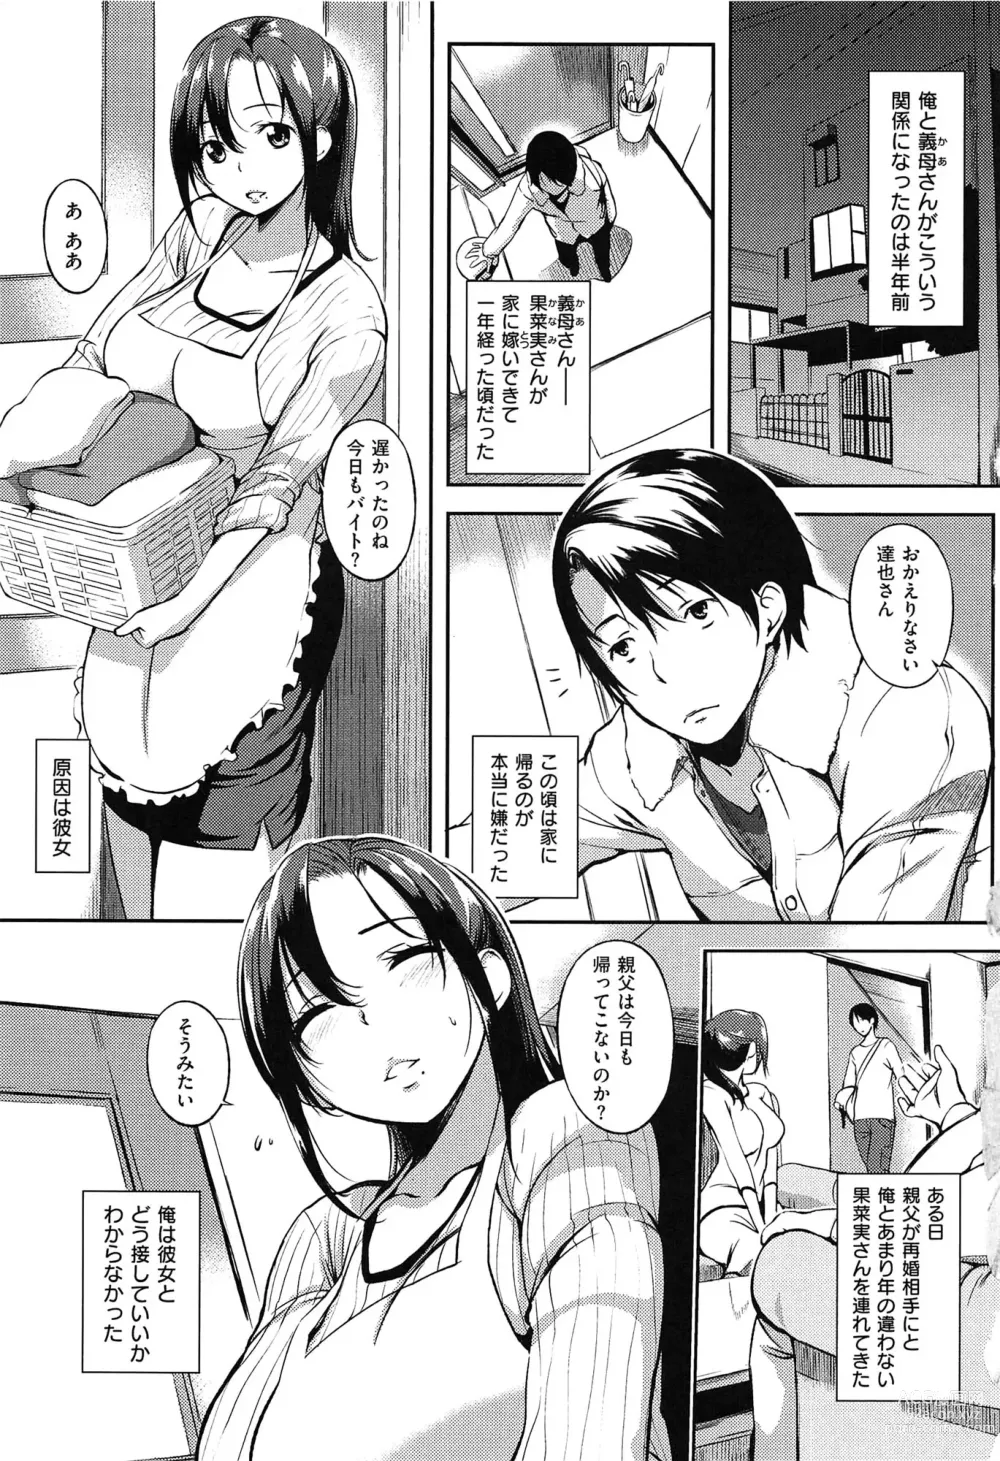 Page 13 of manga 発情コンプレックス